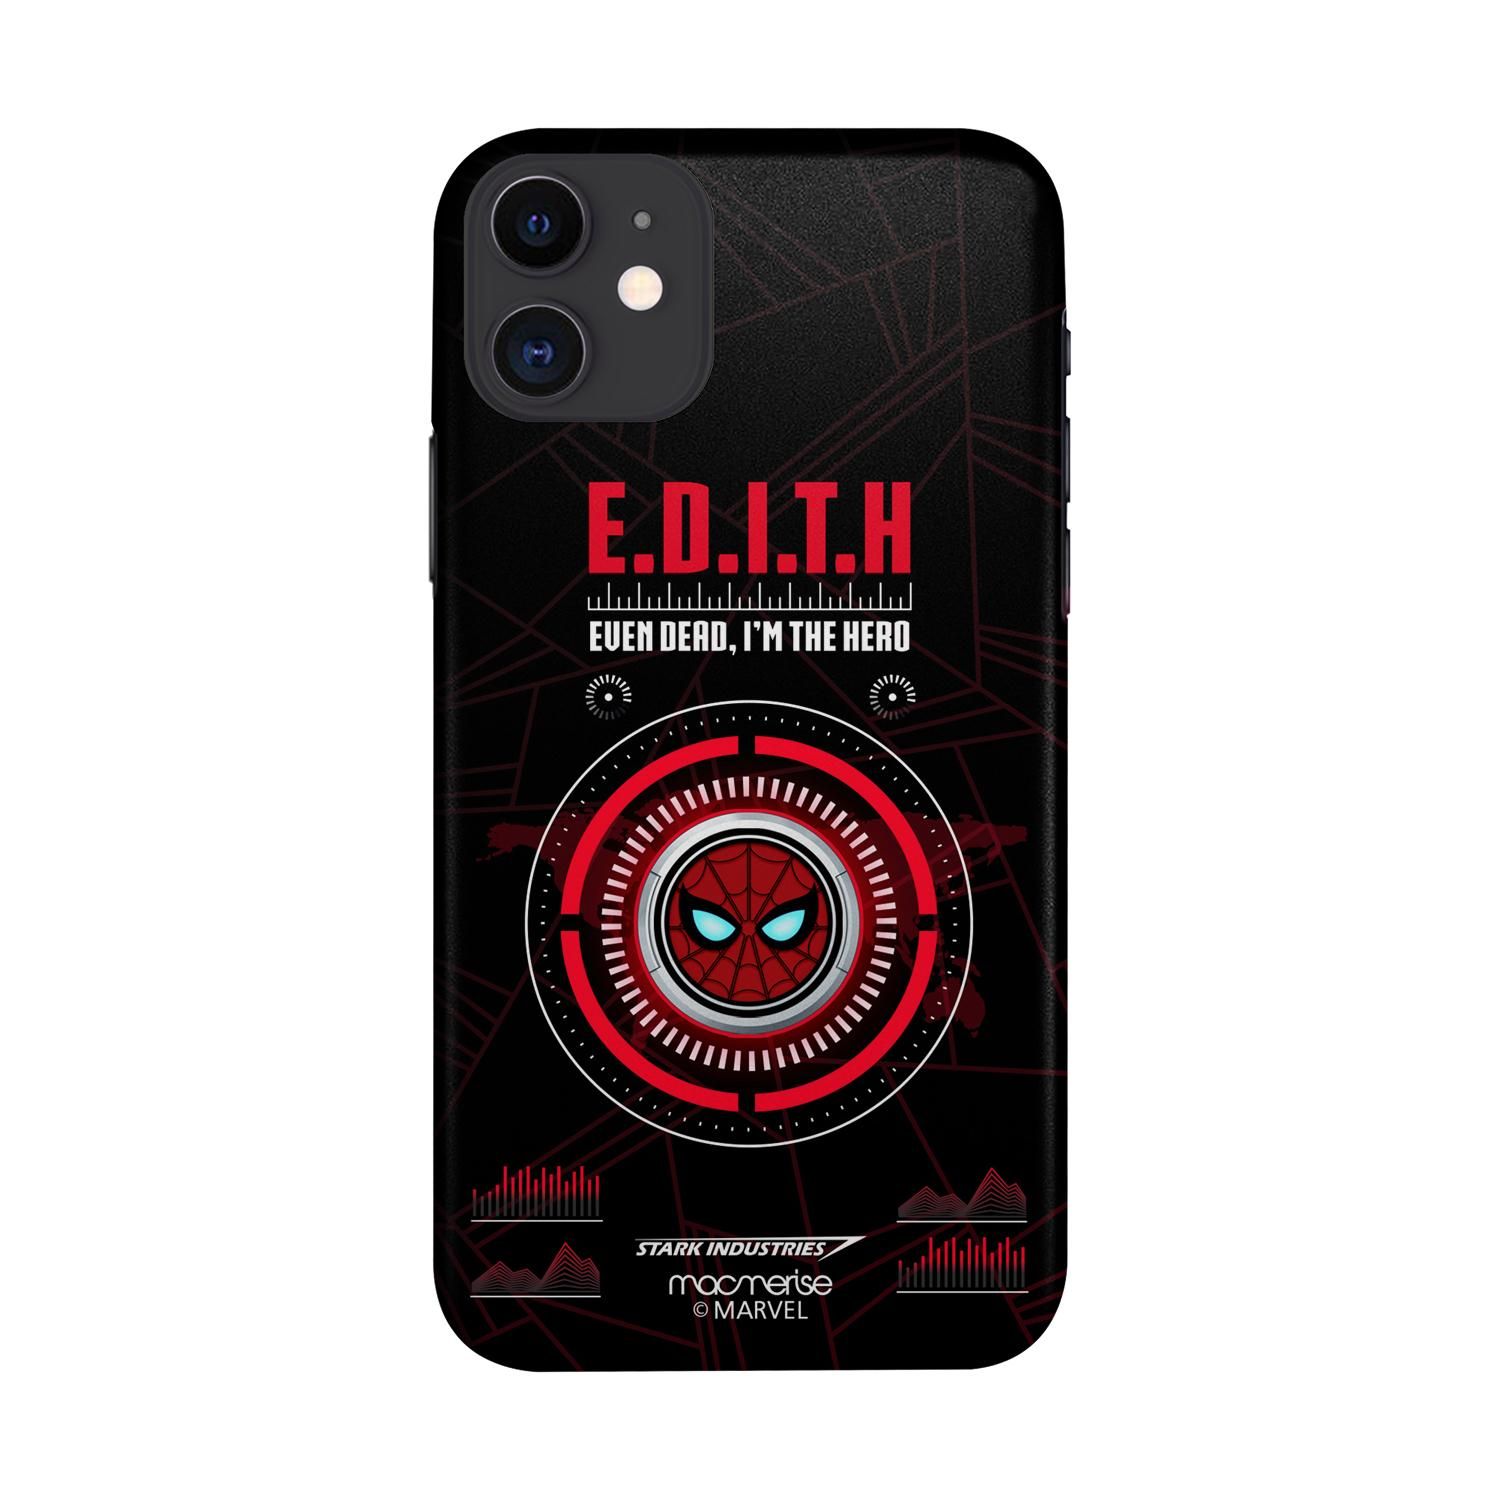 Buy Hello Edith - Sleek Phone Case for iPhone 11 Online